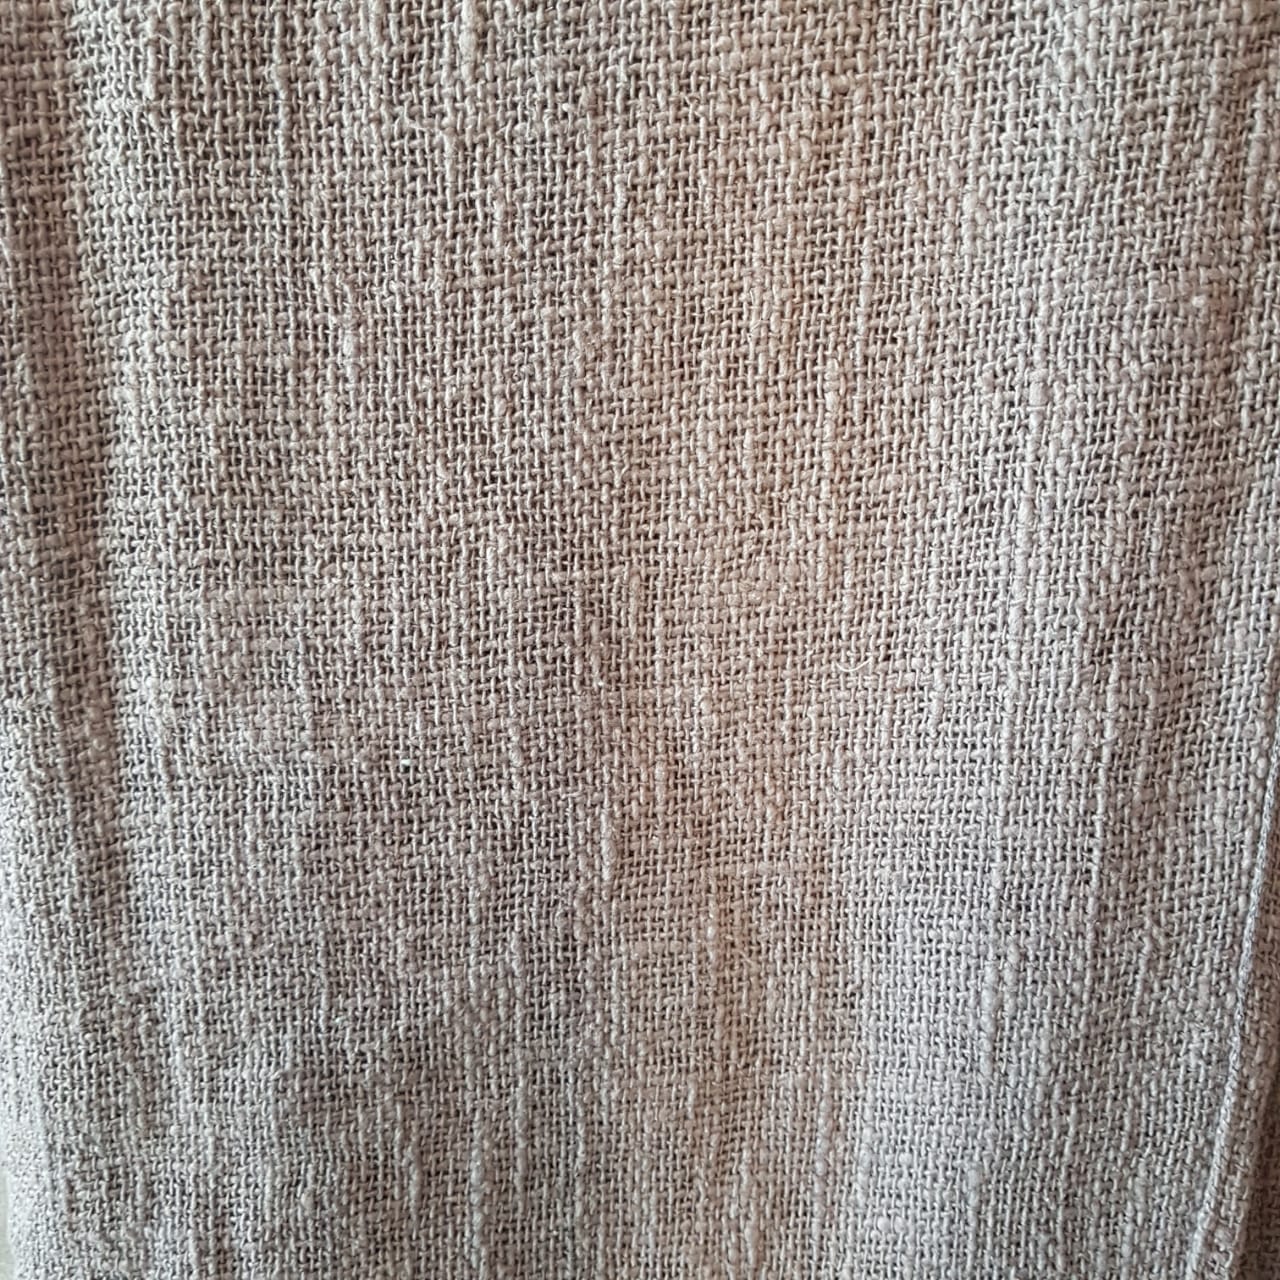 Soft Grey Throw Blanket with Ivory Tassels